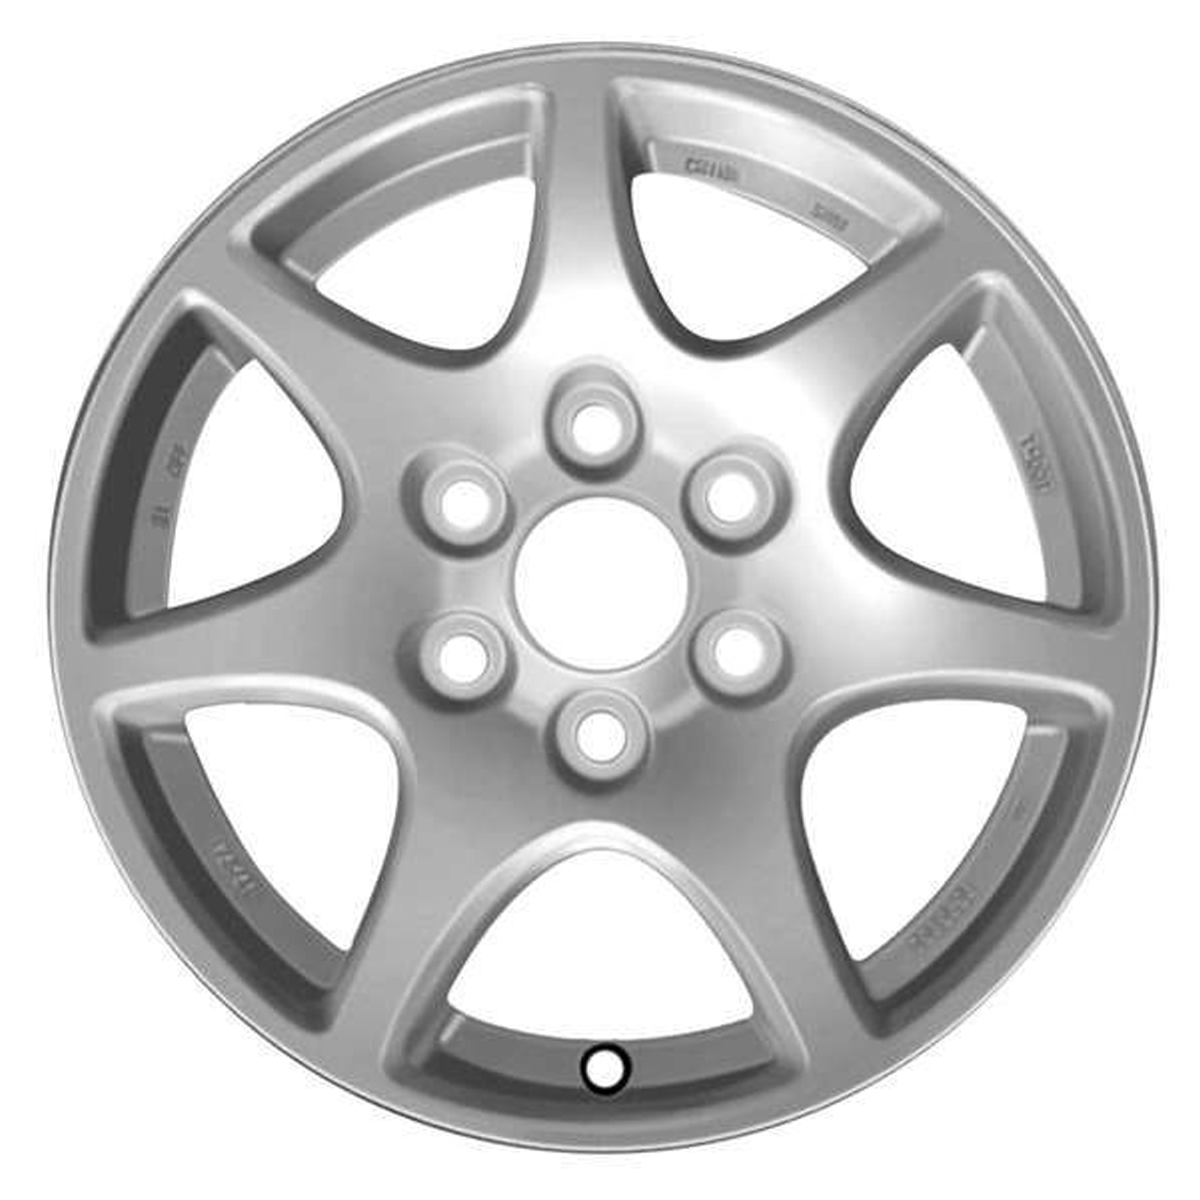 2021 GMC Yukon XL 17" OEM Wheel Rim W5292C